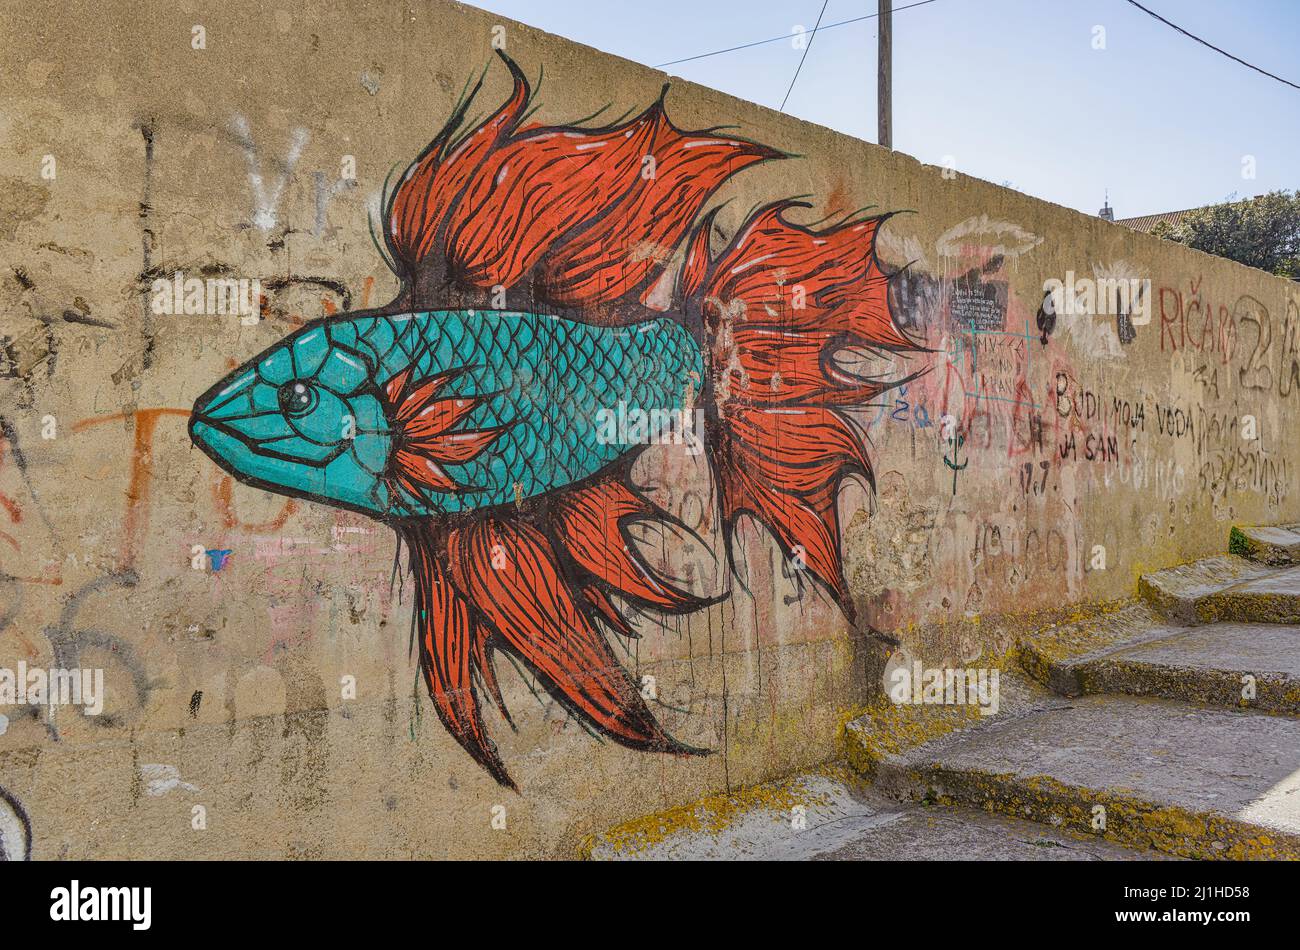 Fish graffiti on the wall at Sali Dugi Otok Croatia Stock Photo